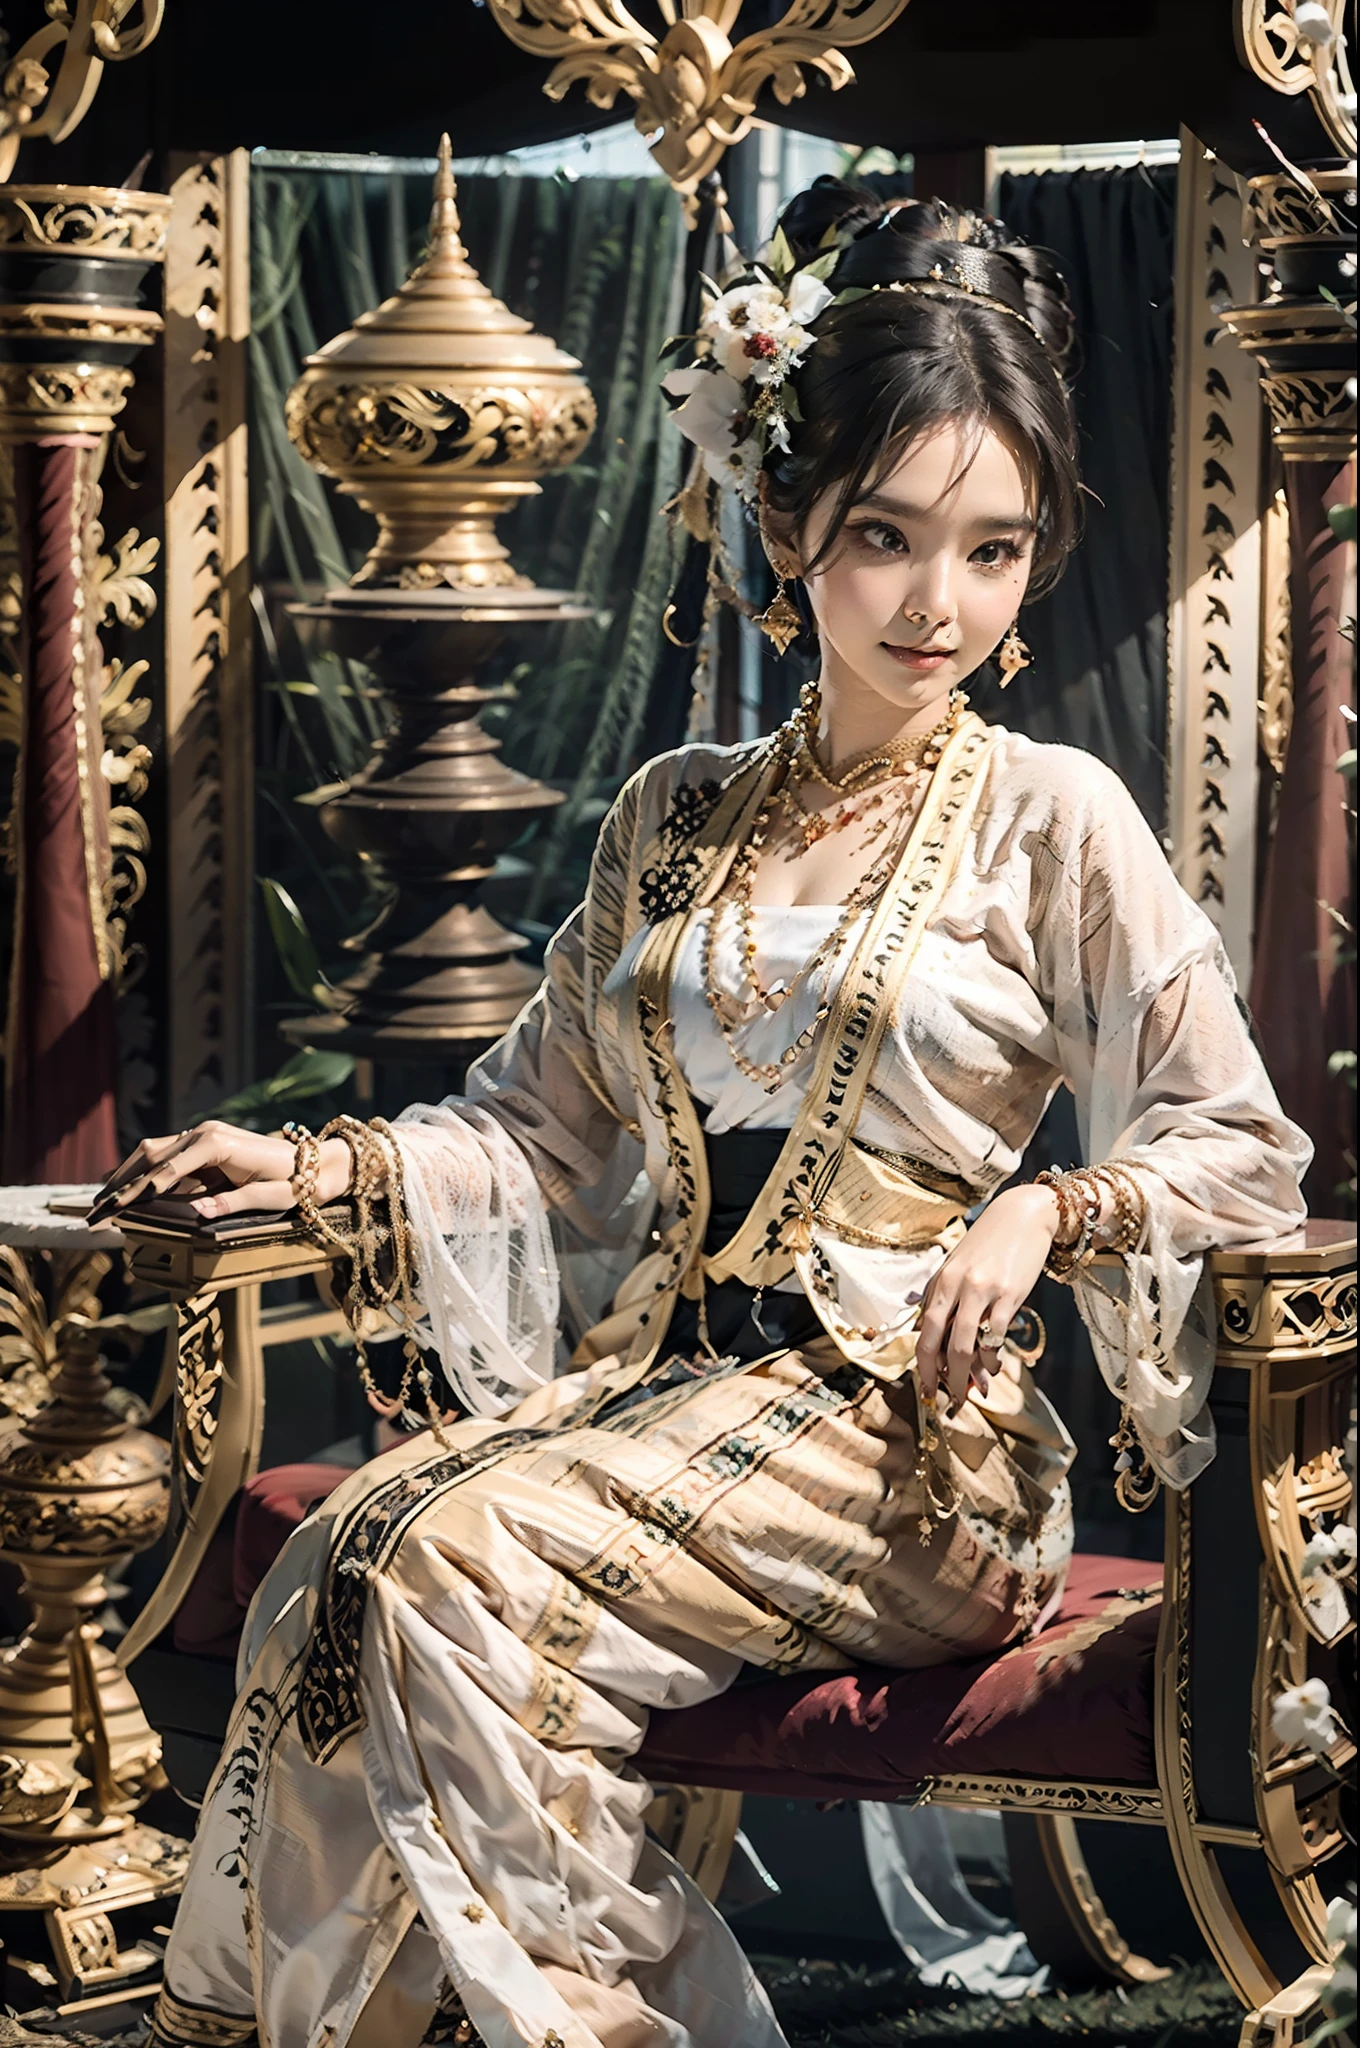 MMTDビルマ柄の伝統的なドレスは美しい女王を着る,真珠のネックレスとゴールドのブレスレットを身に着ける,全身ディテールビューティー, 黄金の宮殿の長い黄金の伝統的な玉座に王室の態度で座っている, ミャンマー伝統髪型,最高の作曲, 全景カバーショット, セニマティックライトニングと超リアルなディテール, オクタンレンダリング, アンリアルエンジン, シャープなフォーカス,32K ,UHD解像度